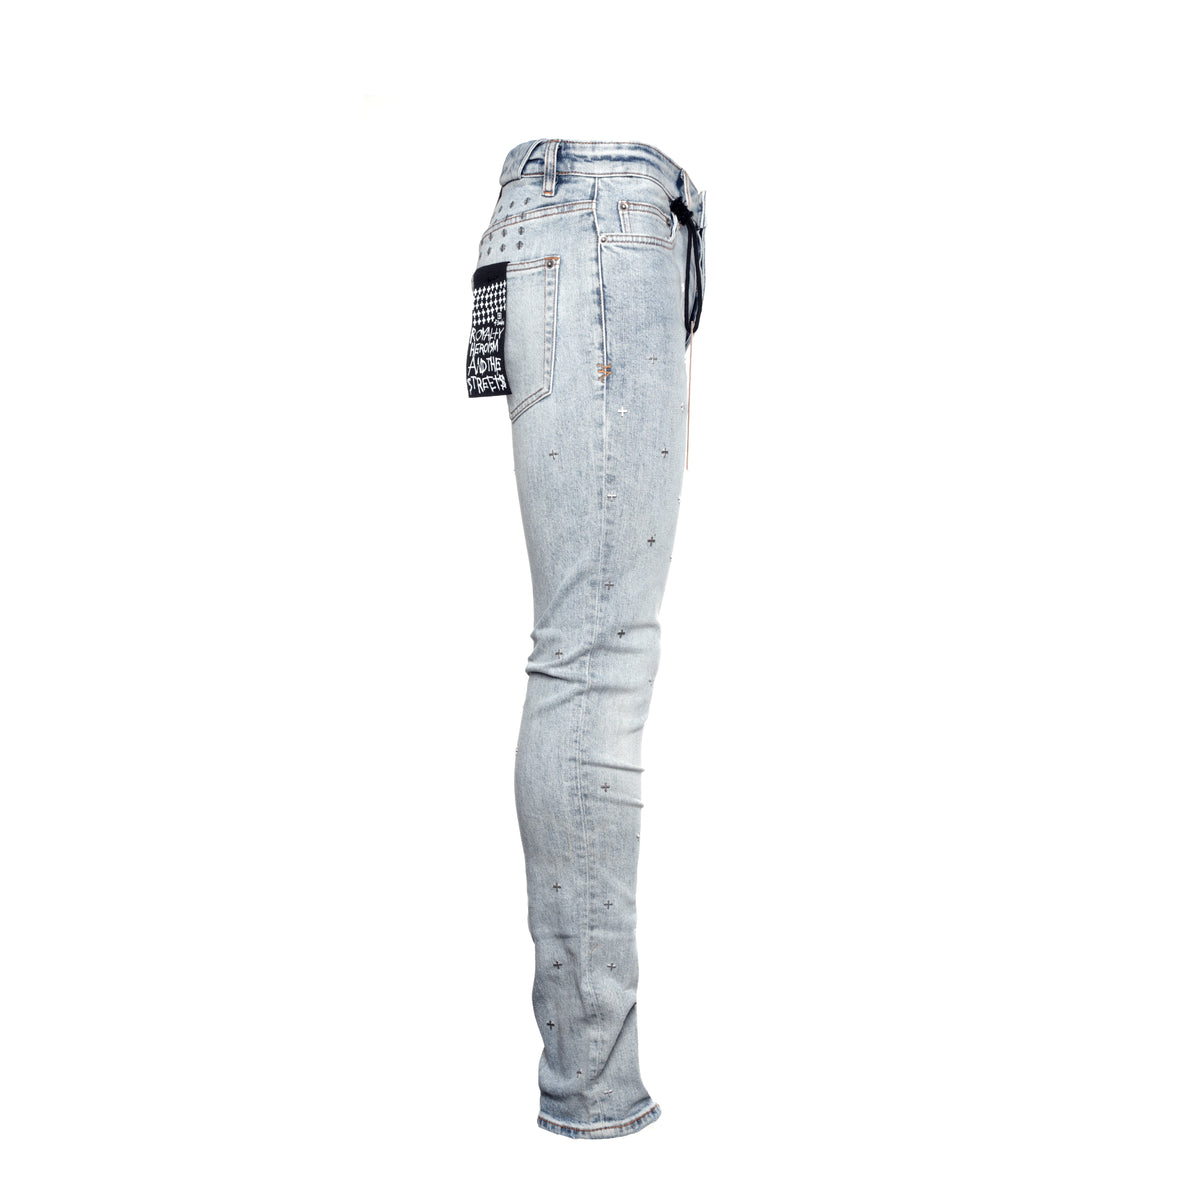 Ksubi Chitch Metalik Blue Men's Skinny Jeans - SIZE Boutique